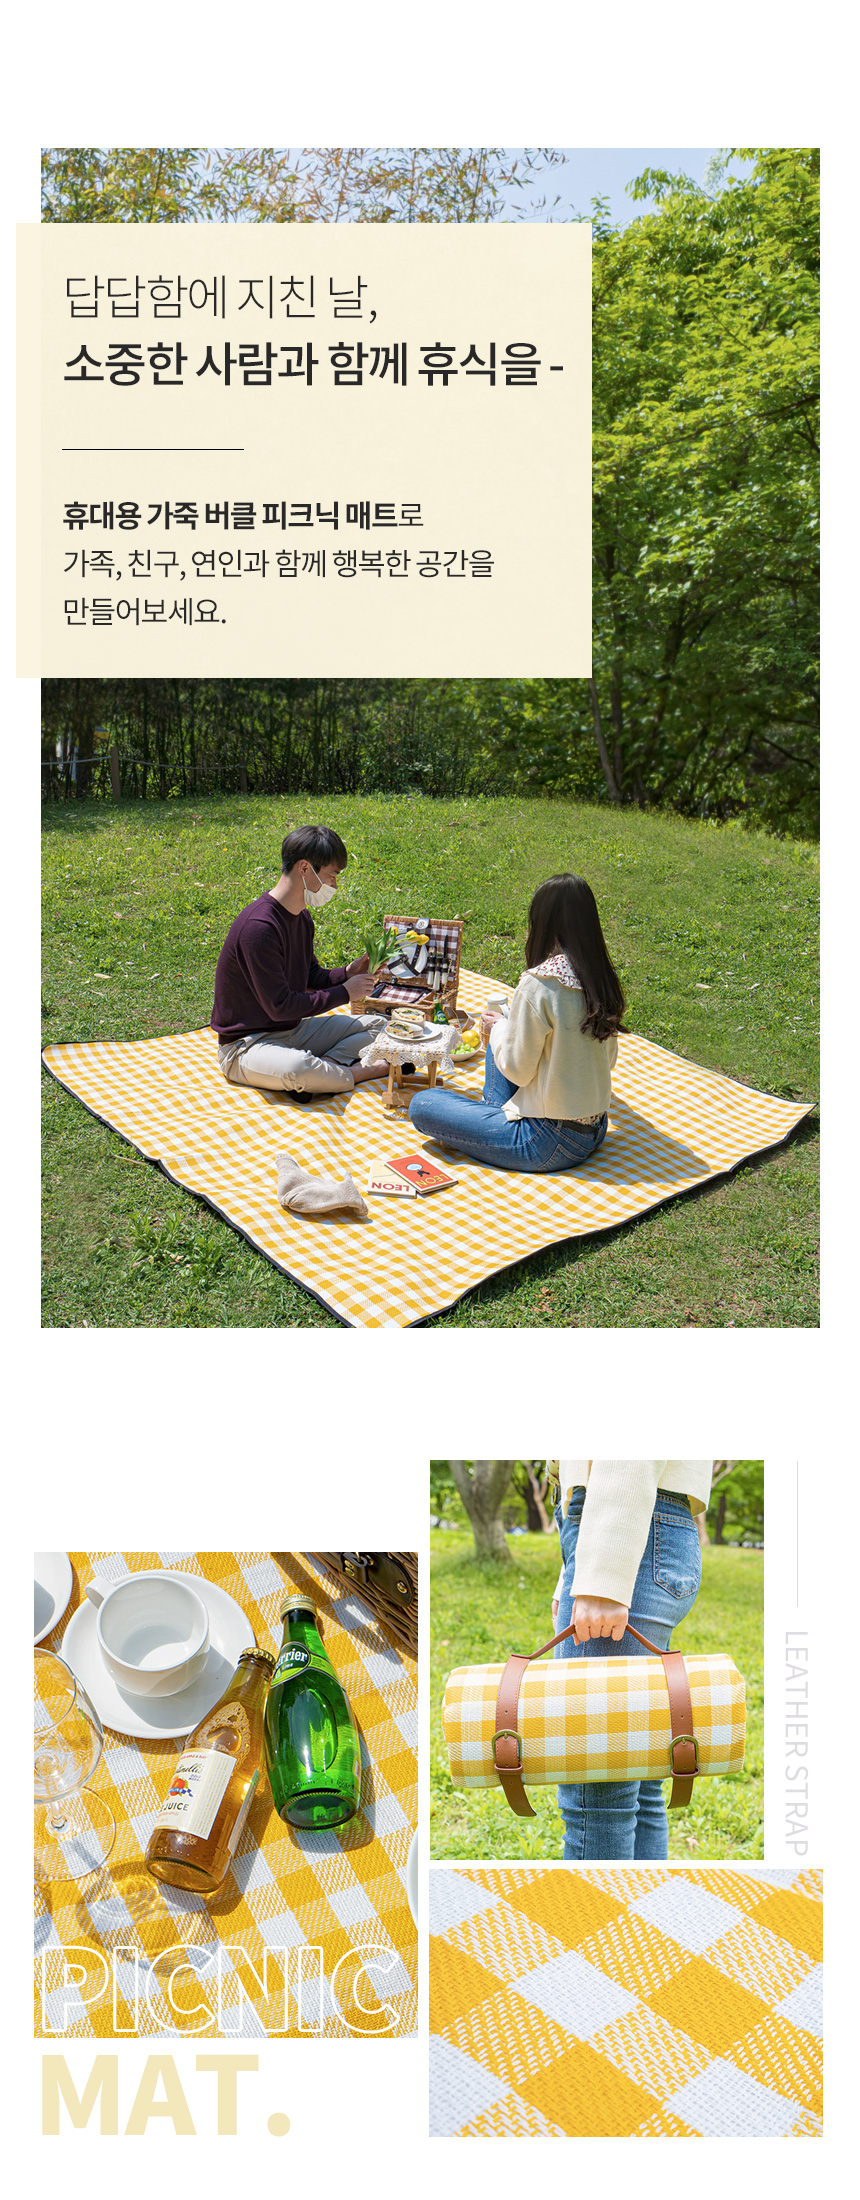 picnic_mat_03.jpg